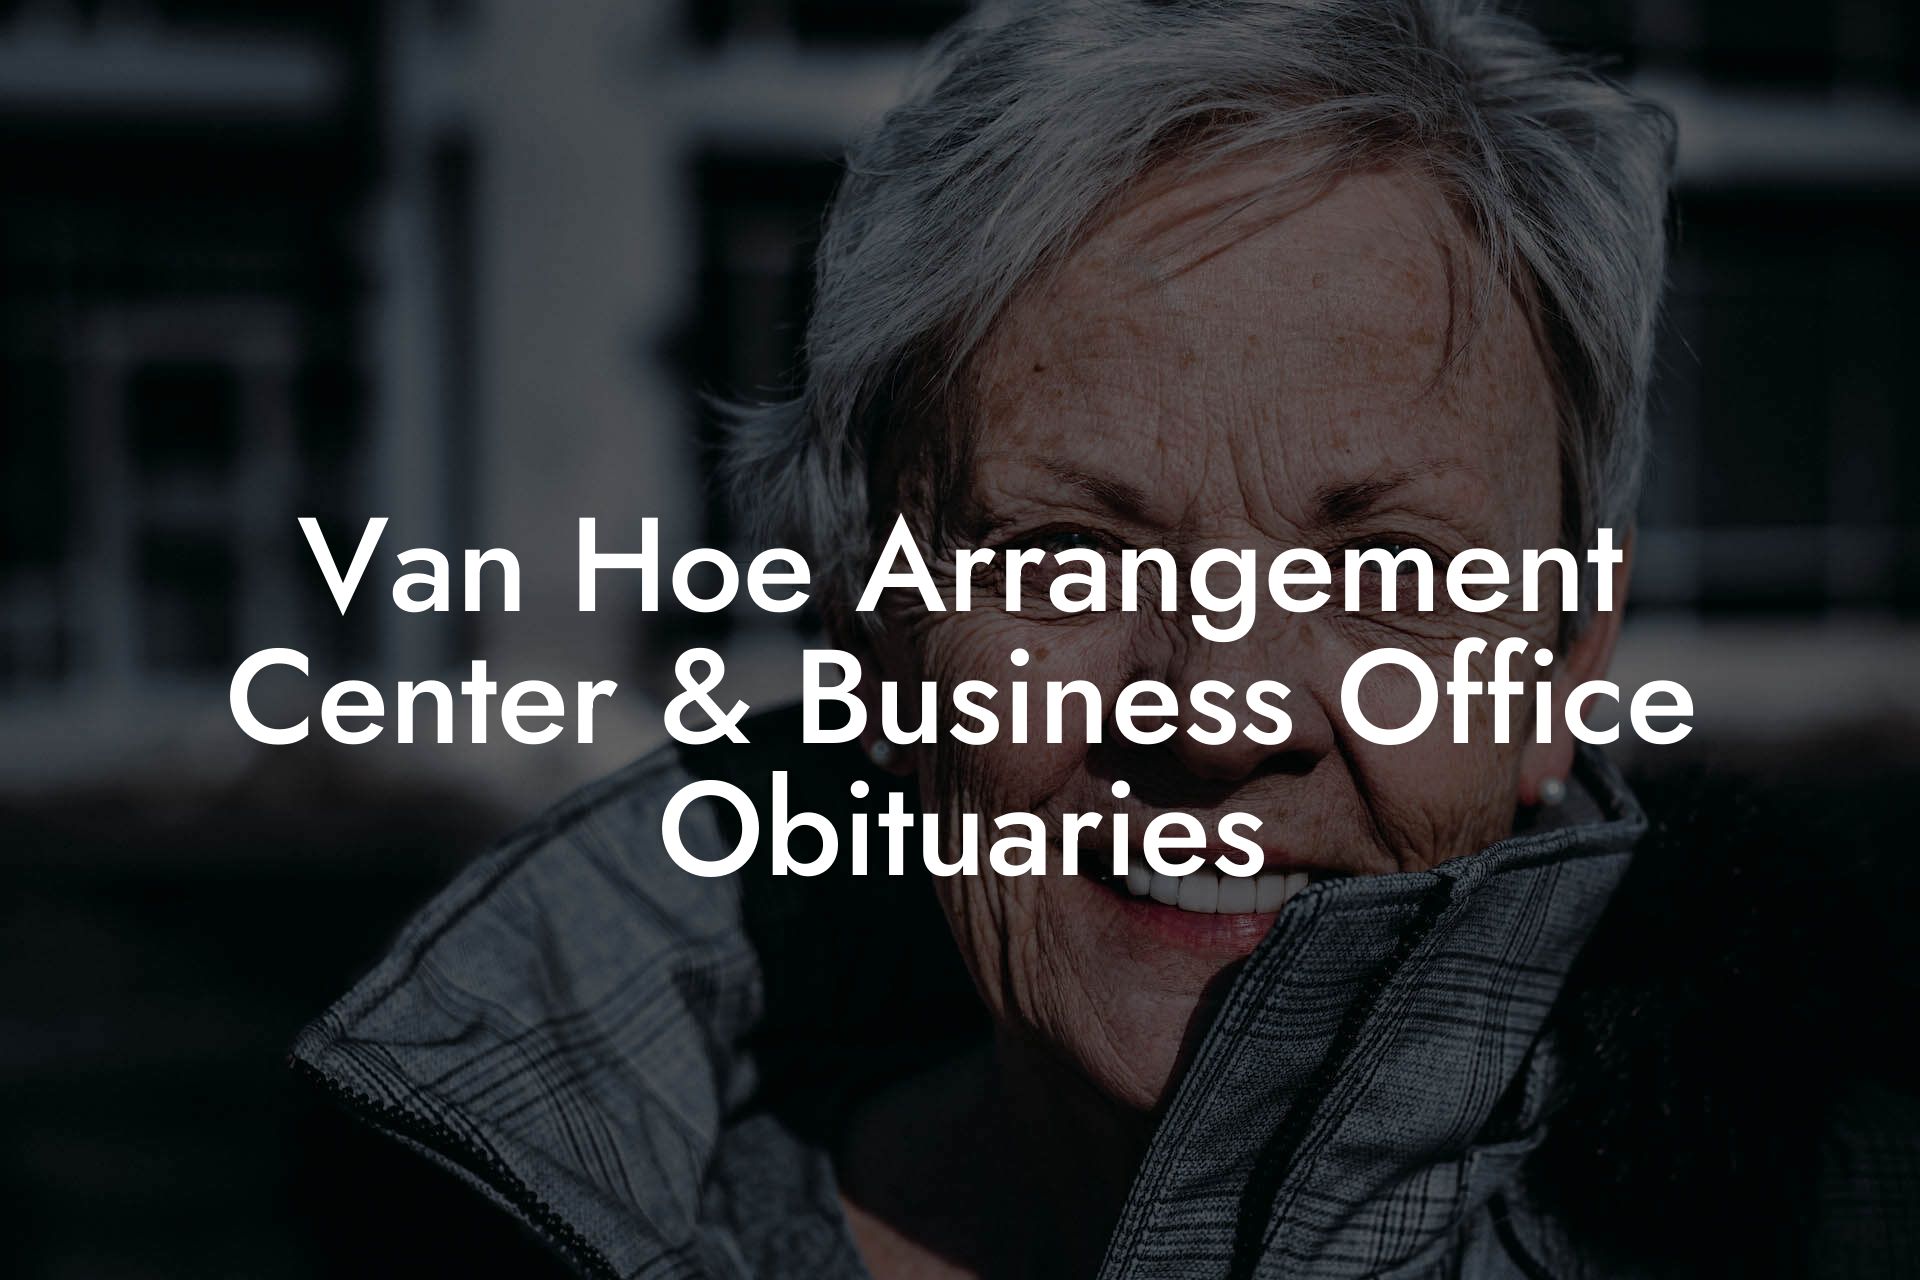 Van Hoe Arrangement Center & Business Office Obituaries